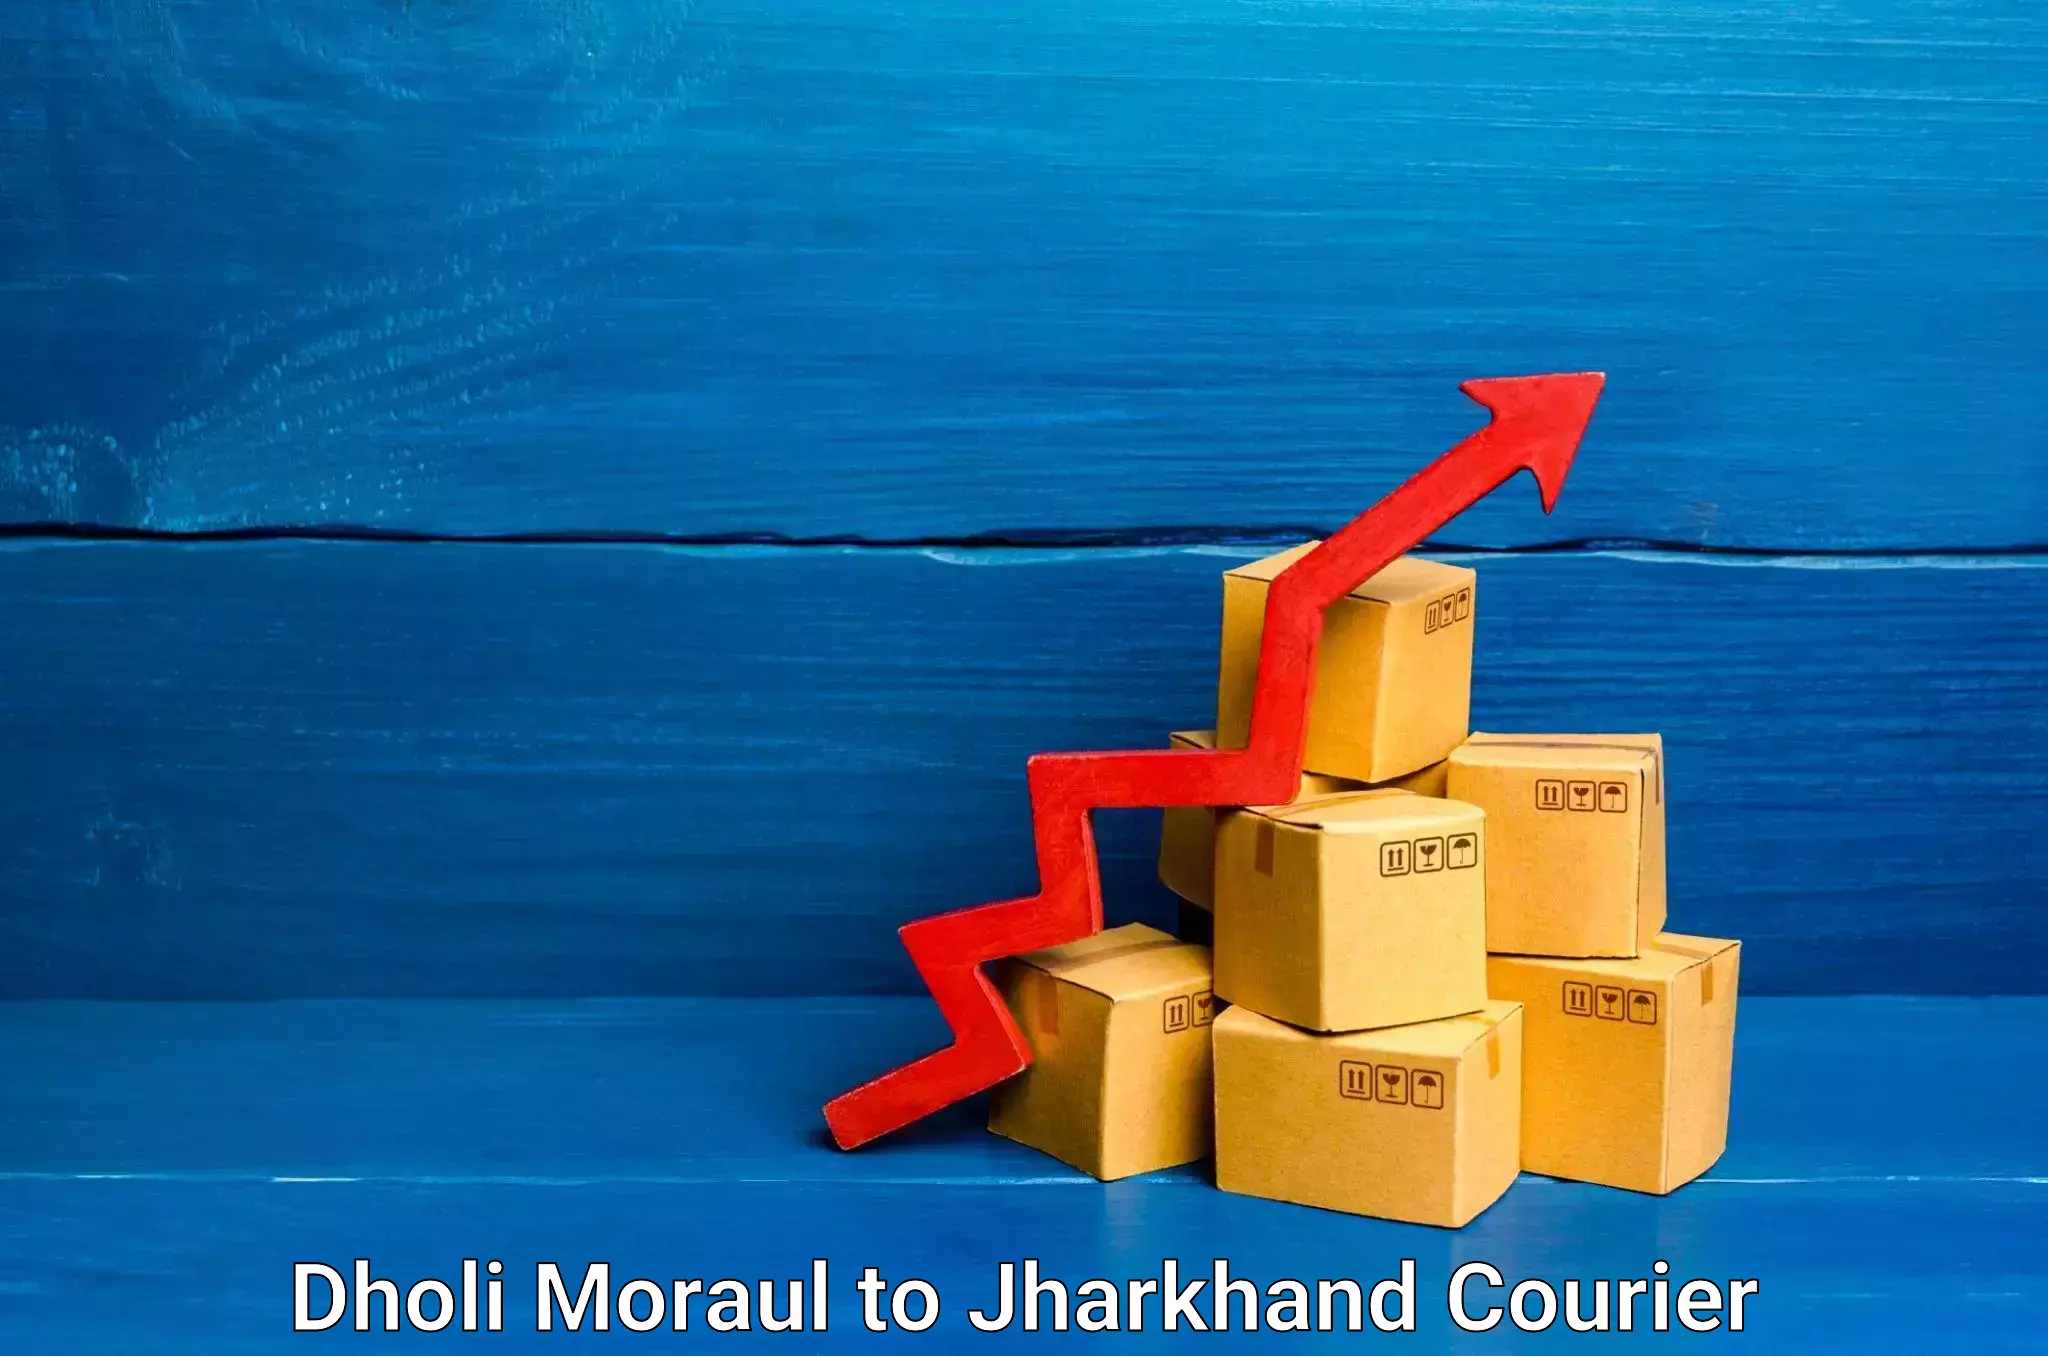 Home goods movers Dholi Moraul to Topchanchi